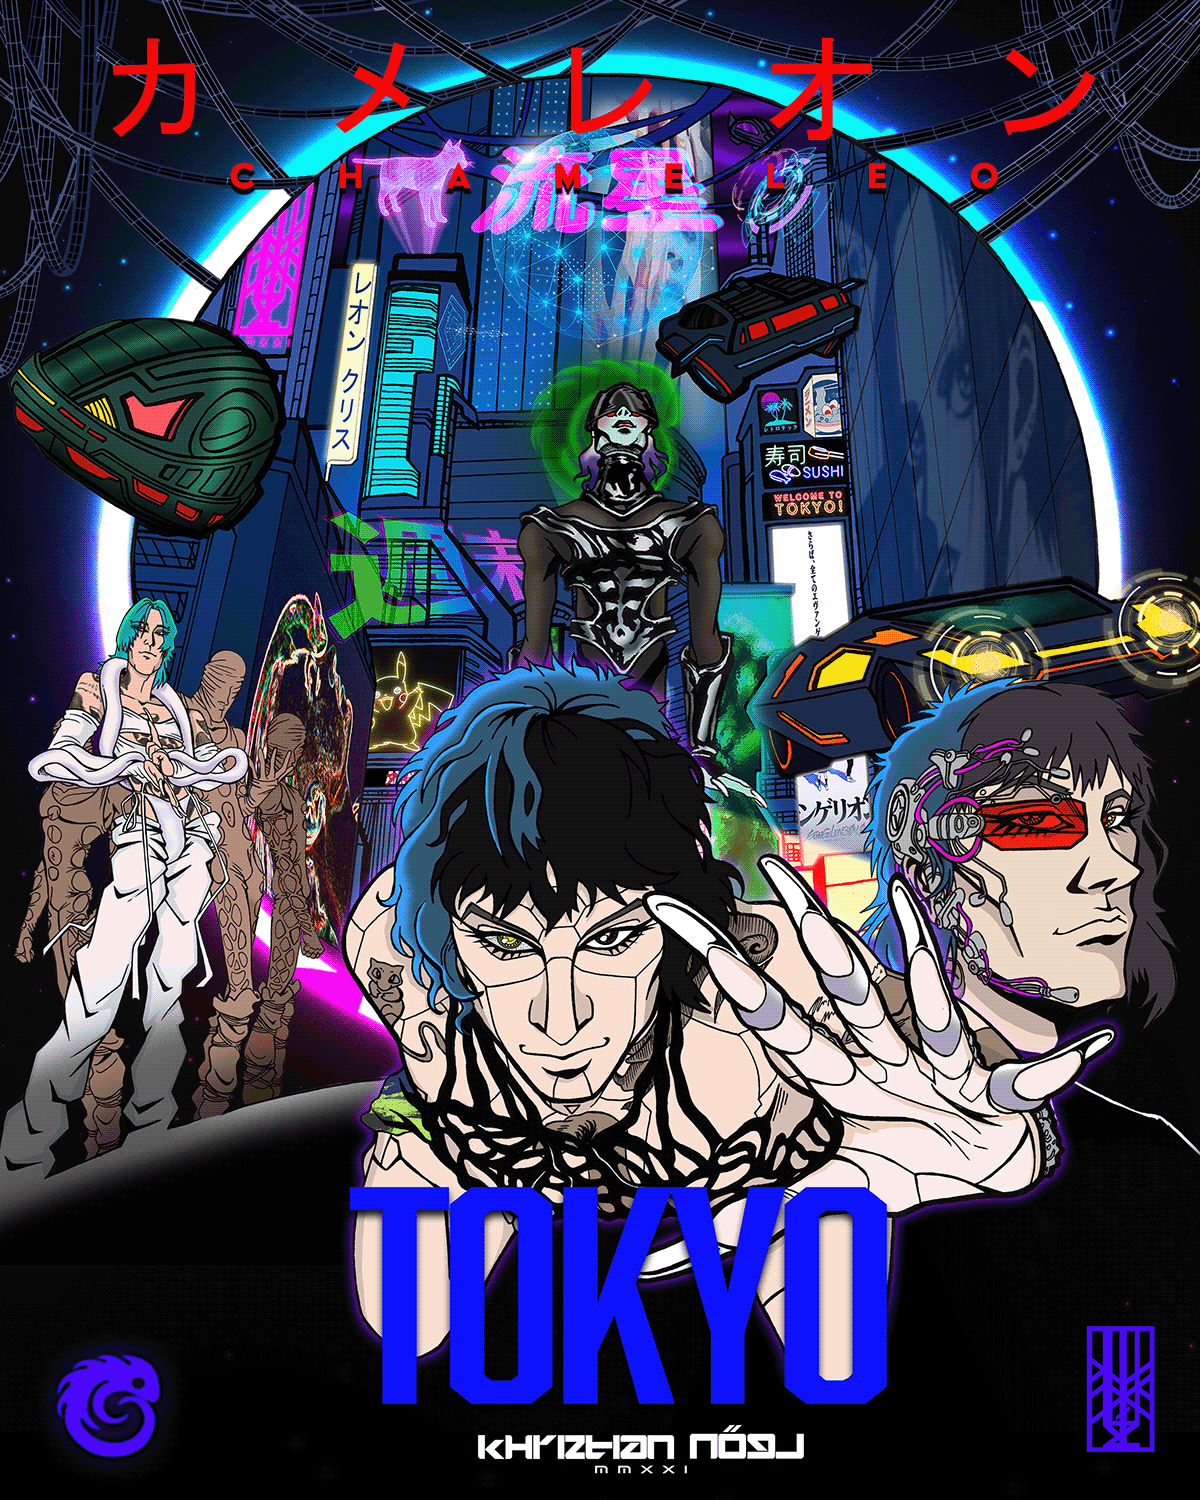 anime chameleo Cyberpunk manga music video music video poster pop poster Scifi tokyo